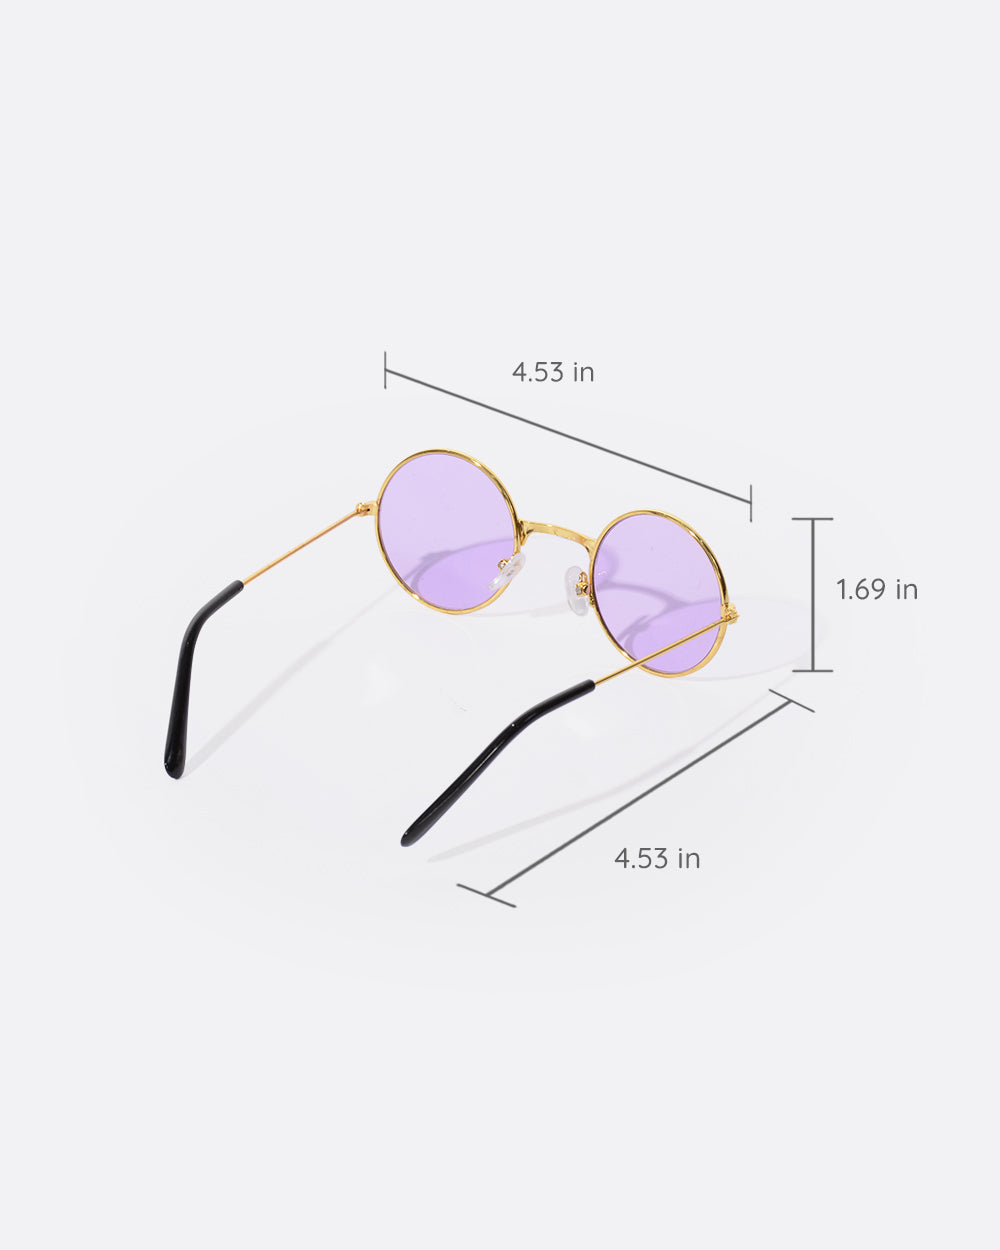 Tinted Lens Dog Glasses - Purple